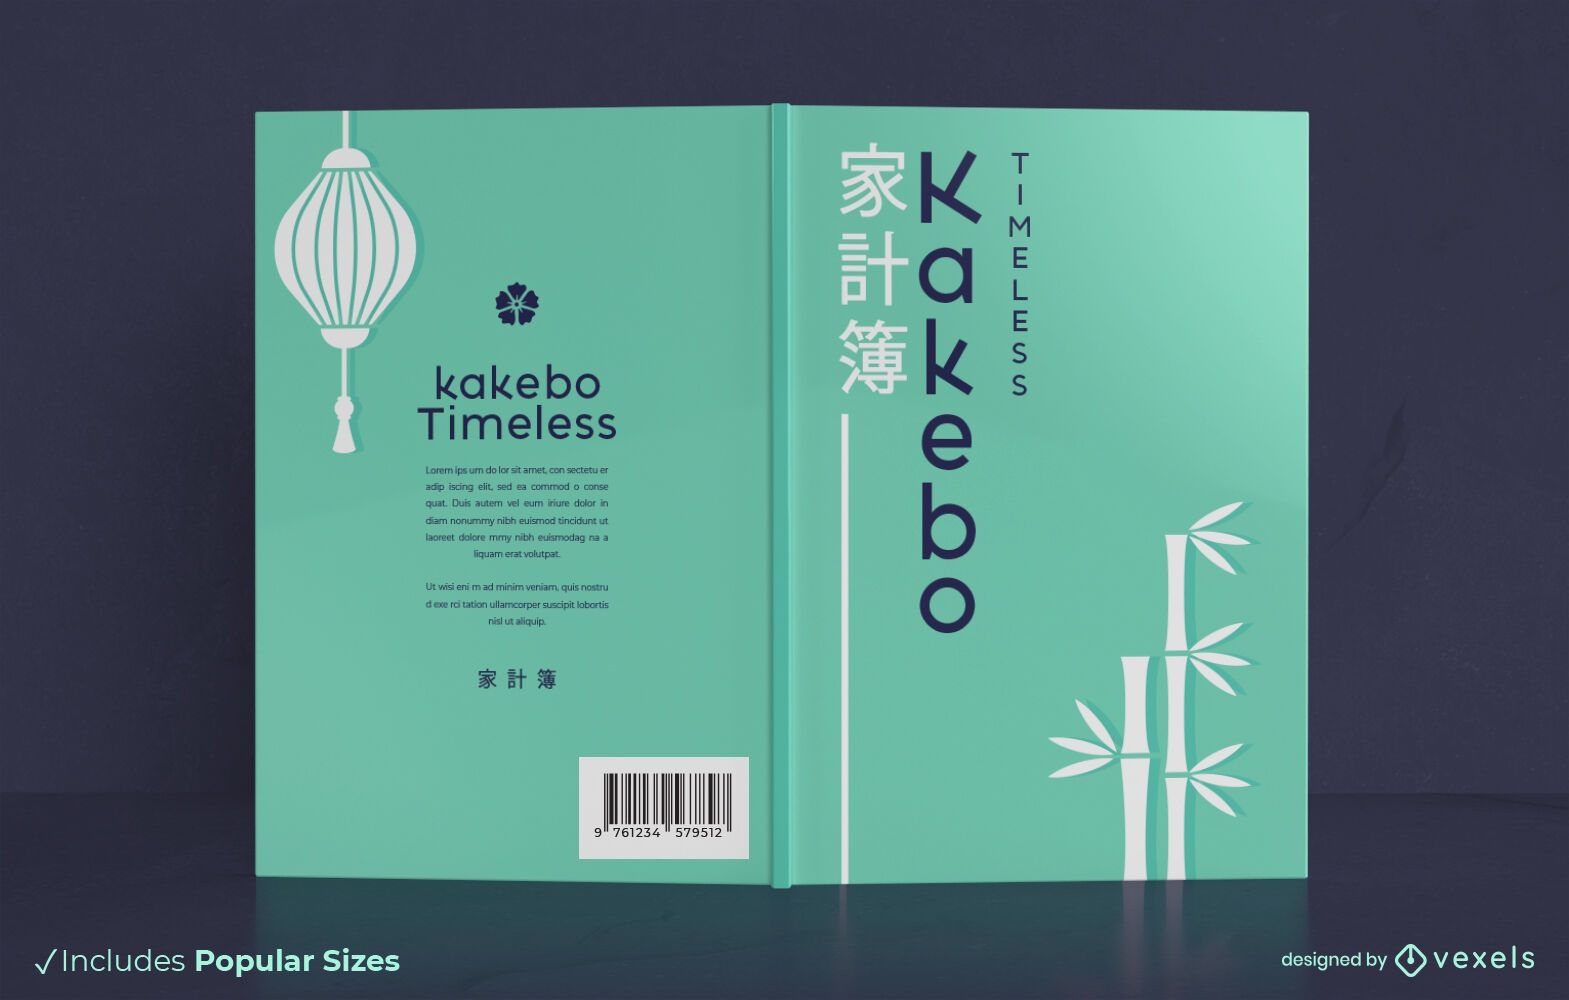 Kakebo Saving Journal Cover Design Vector Download